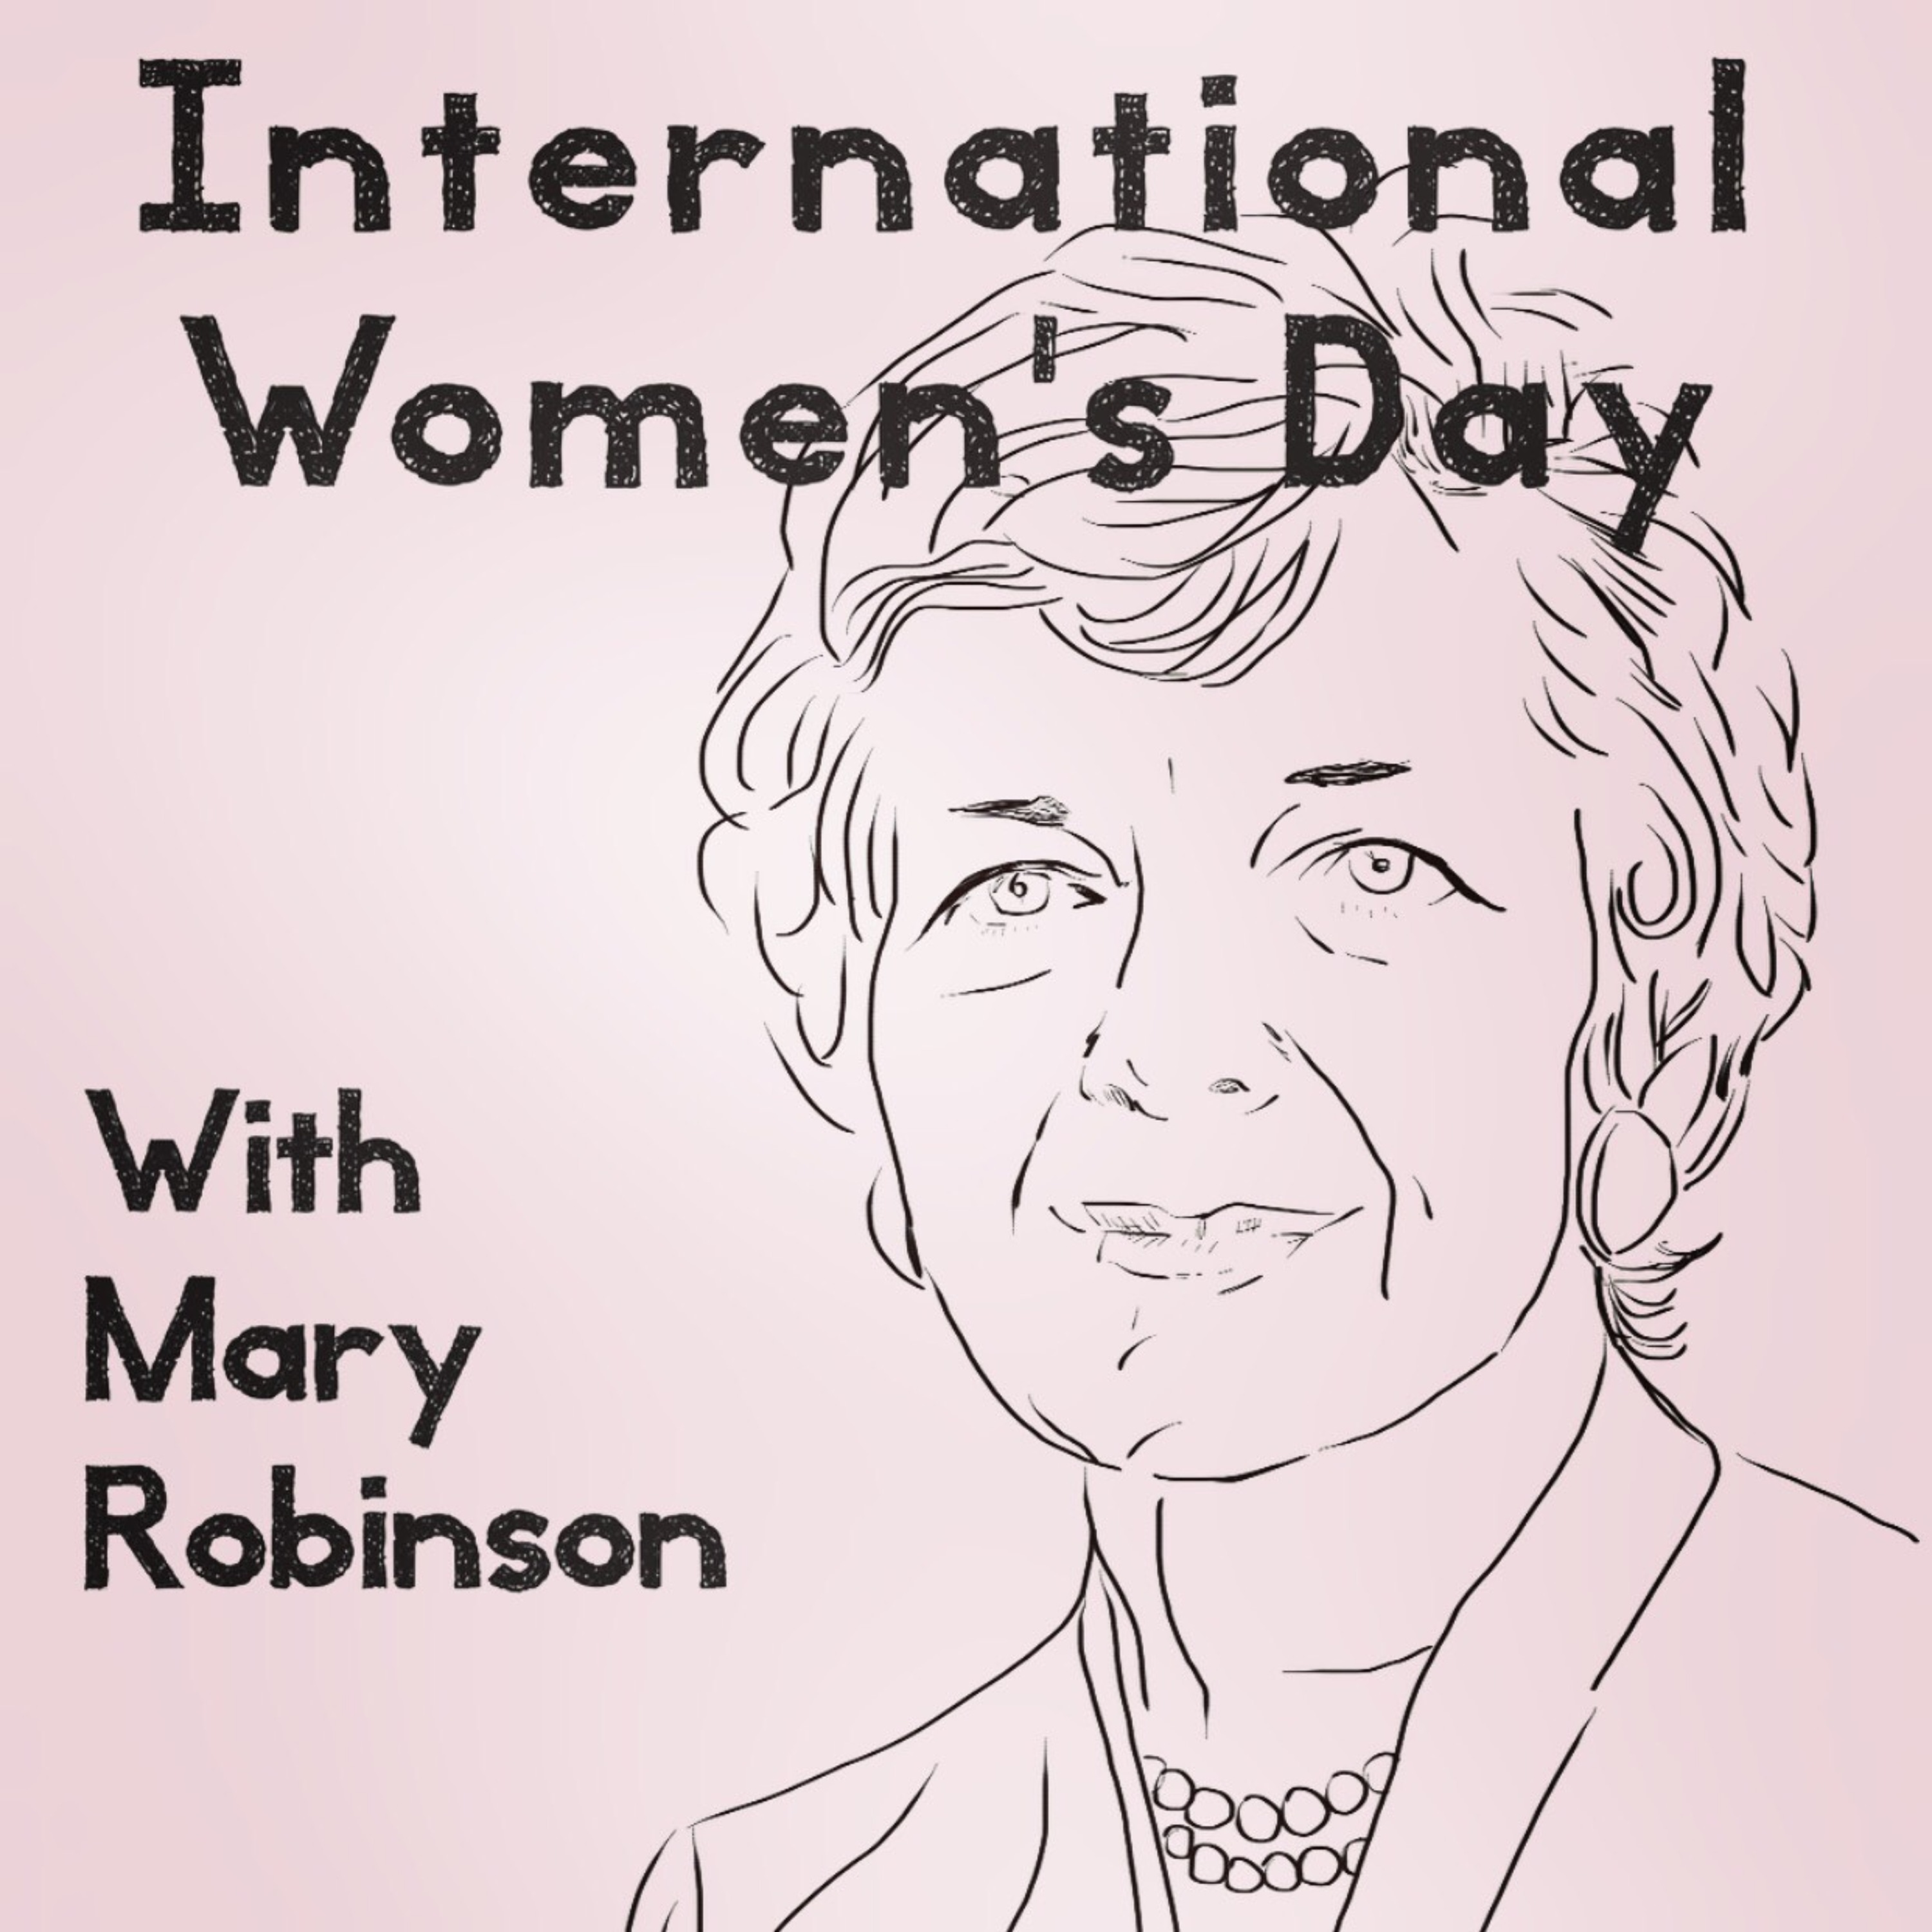 Ex-Irish President Mary Robinson on Hope, Climate Change & Women’s Day